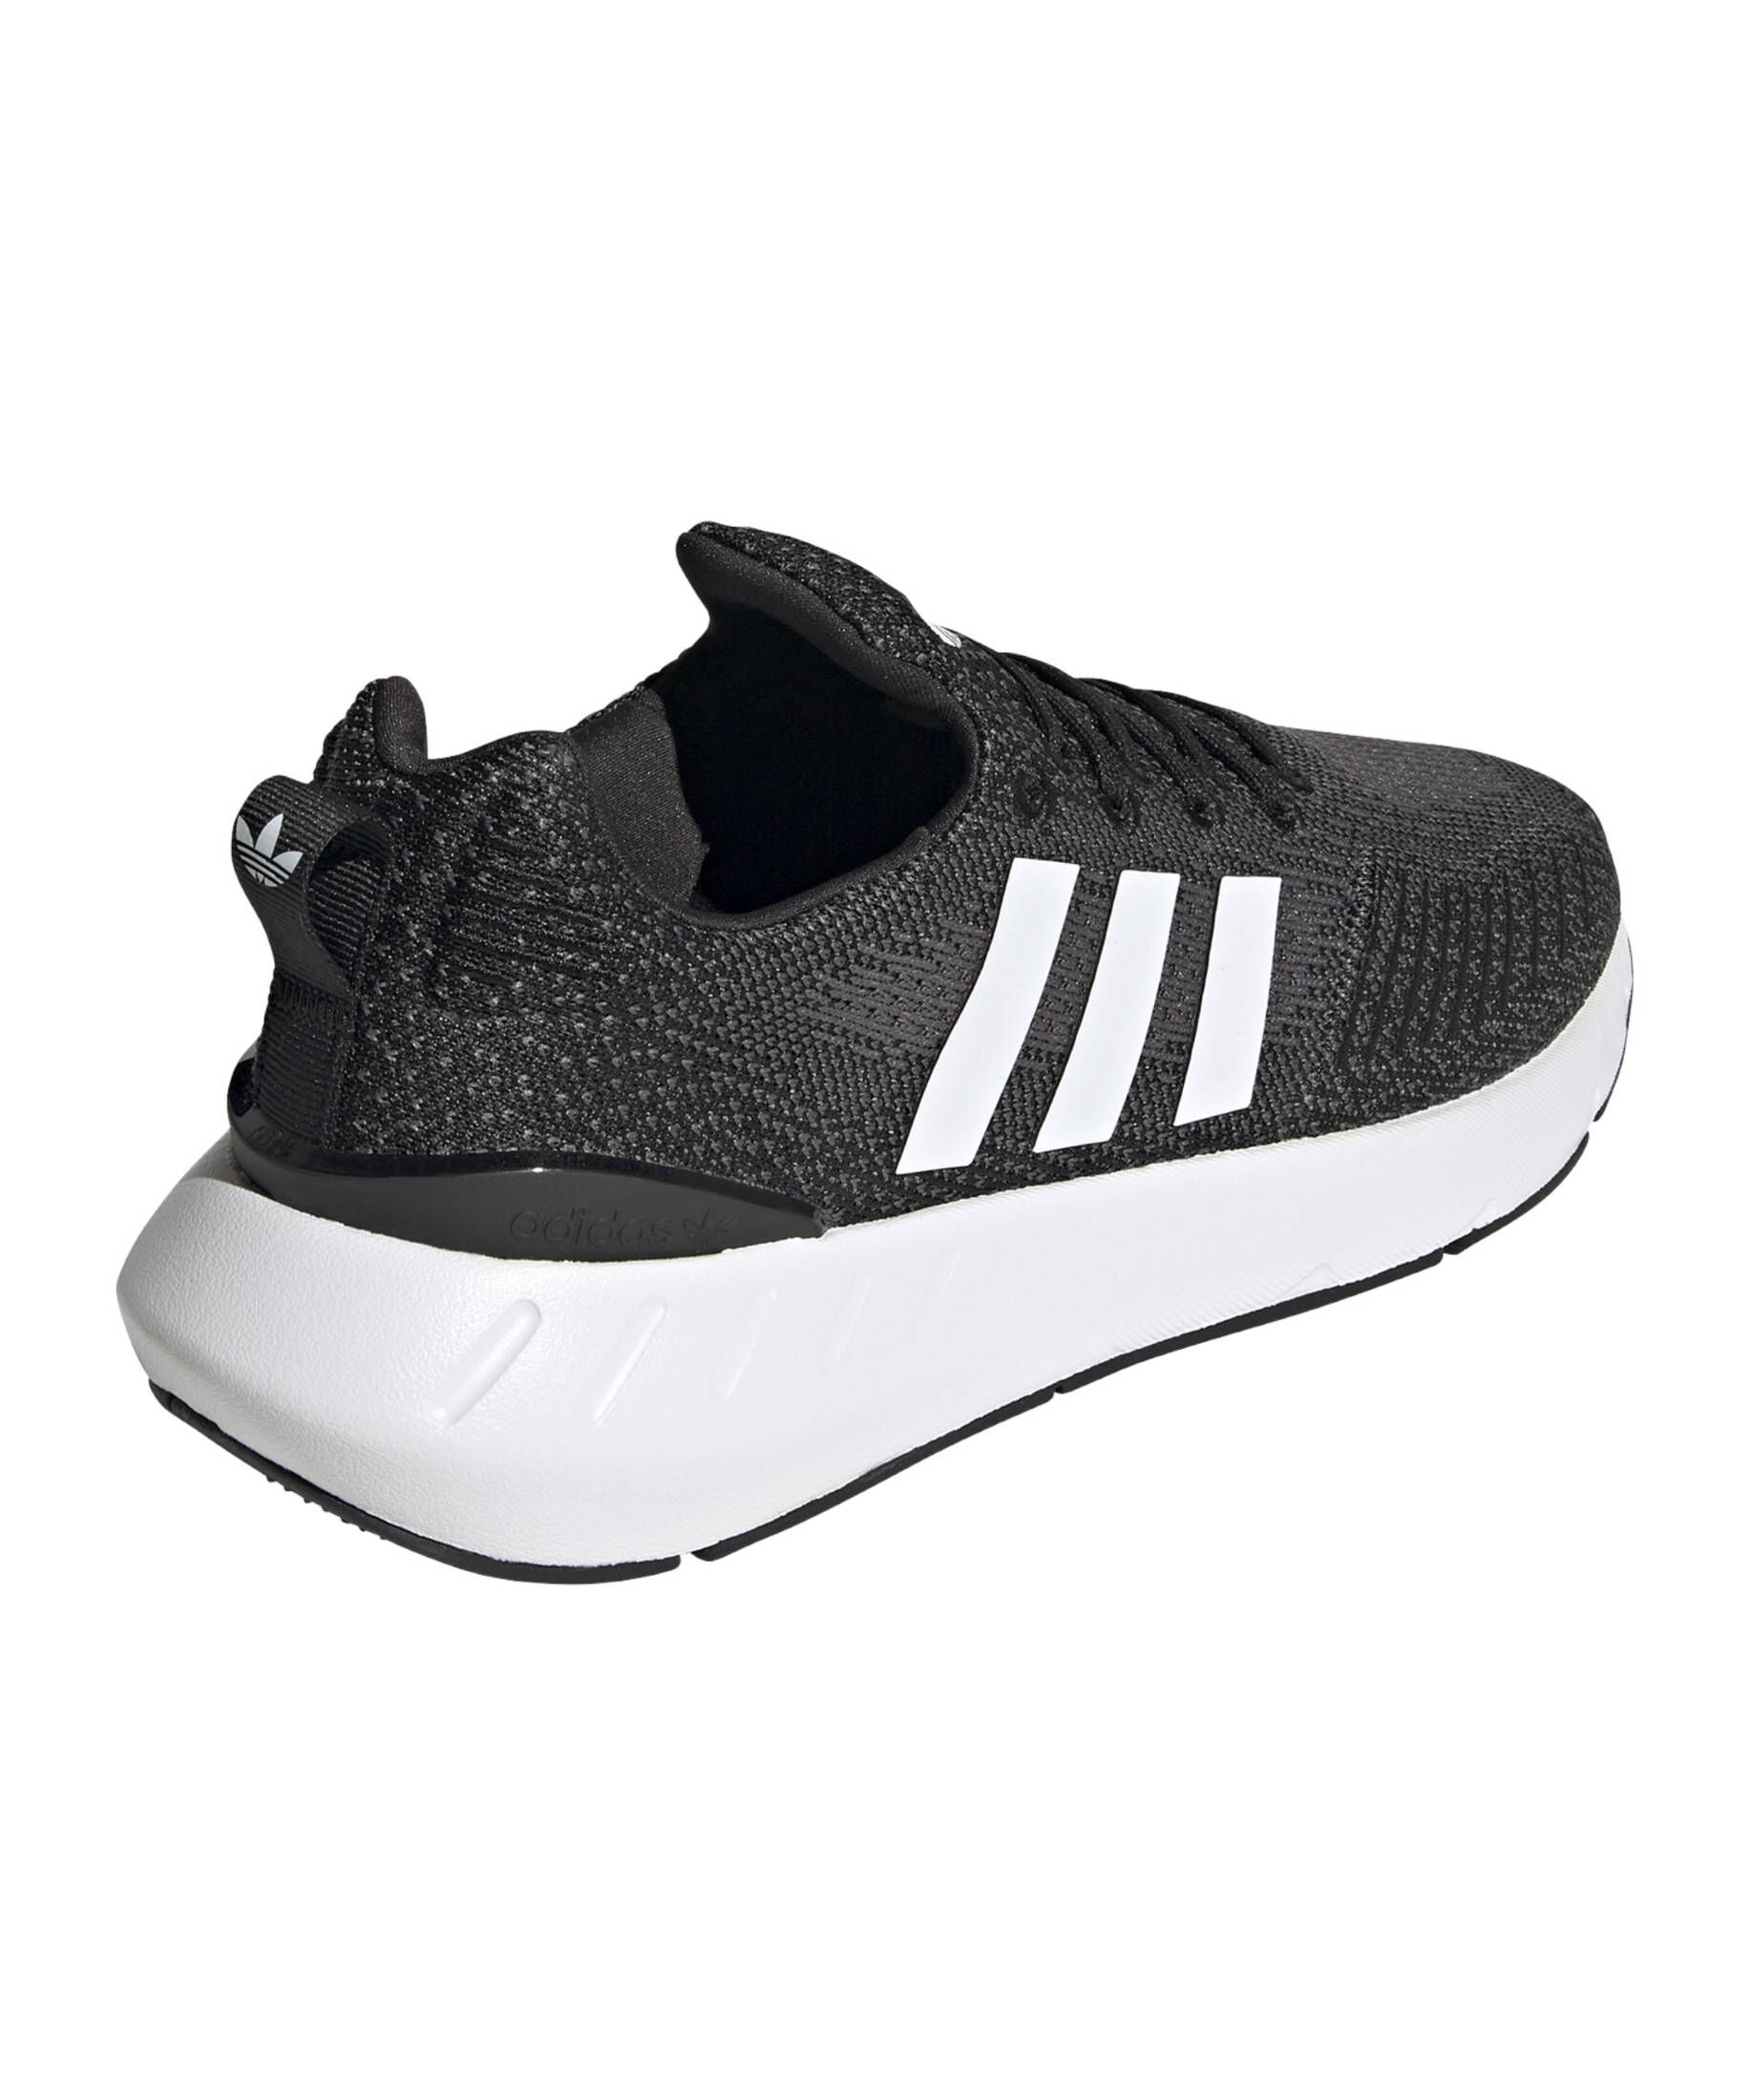 Sneakers Herren Schuhe kaufen 22 - | Swift Run Lifestyle adidas Originals - Herren engelhorn